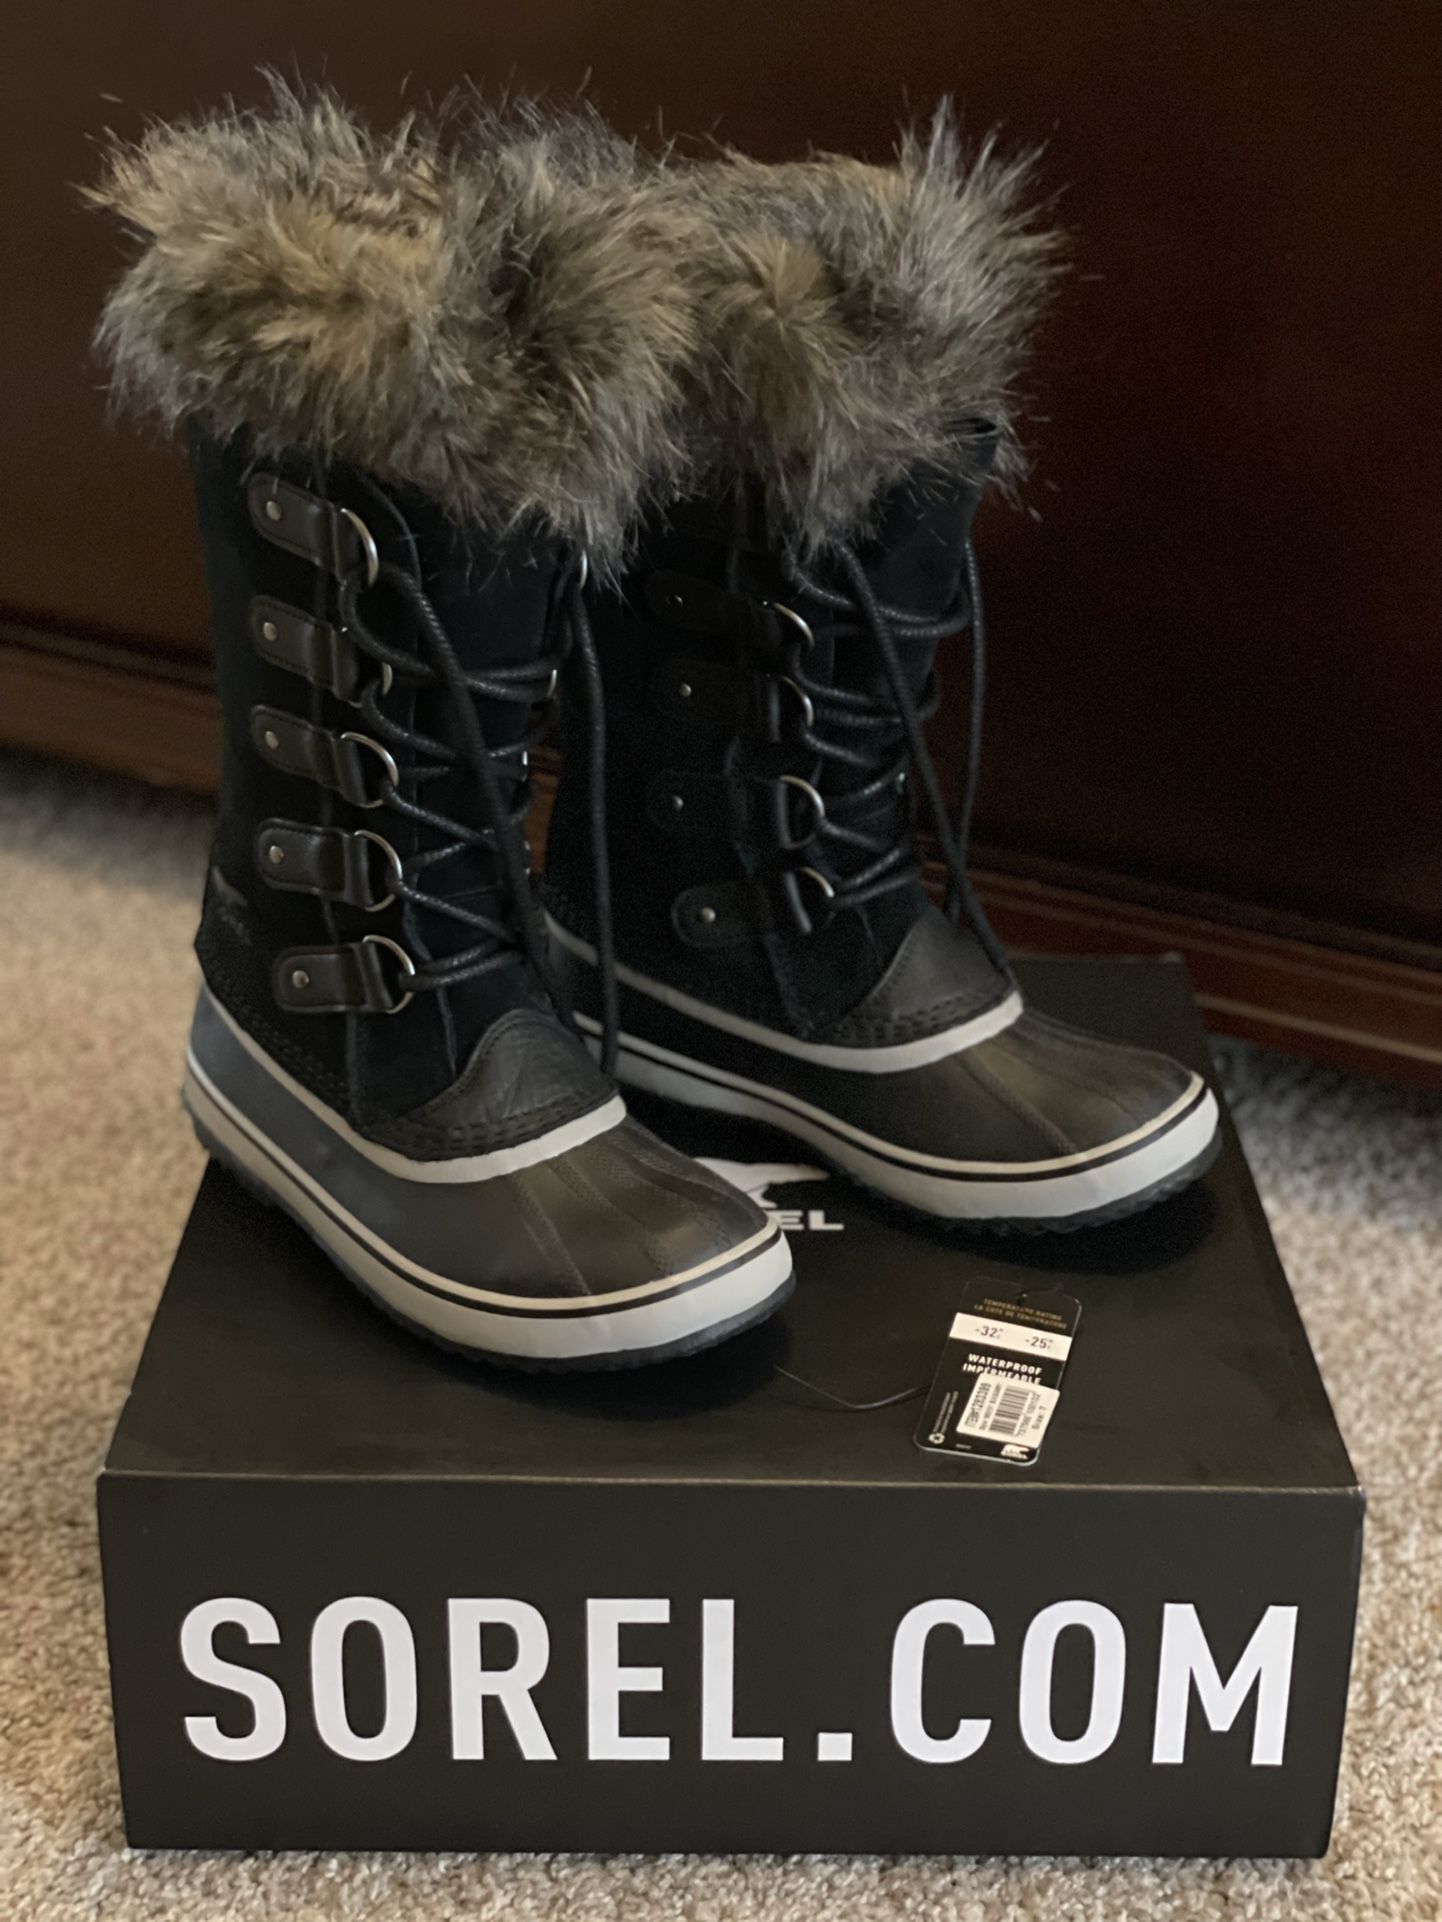 Sorel Joan Of Arctic Boots - Size 7